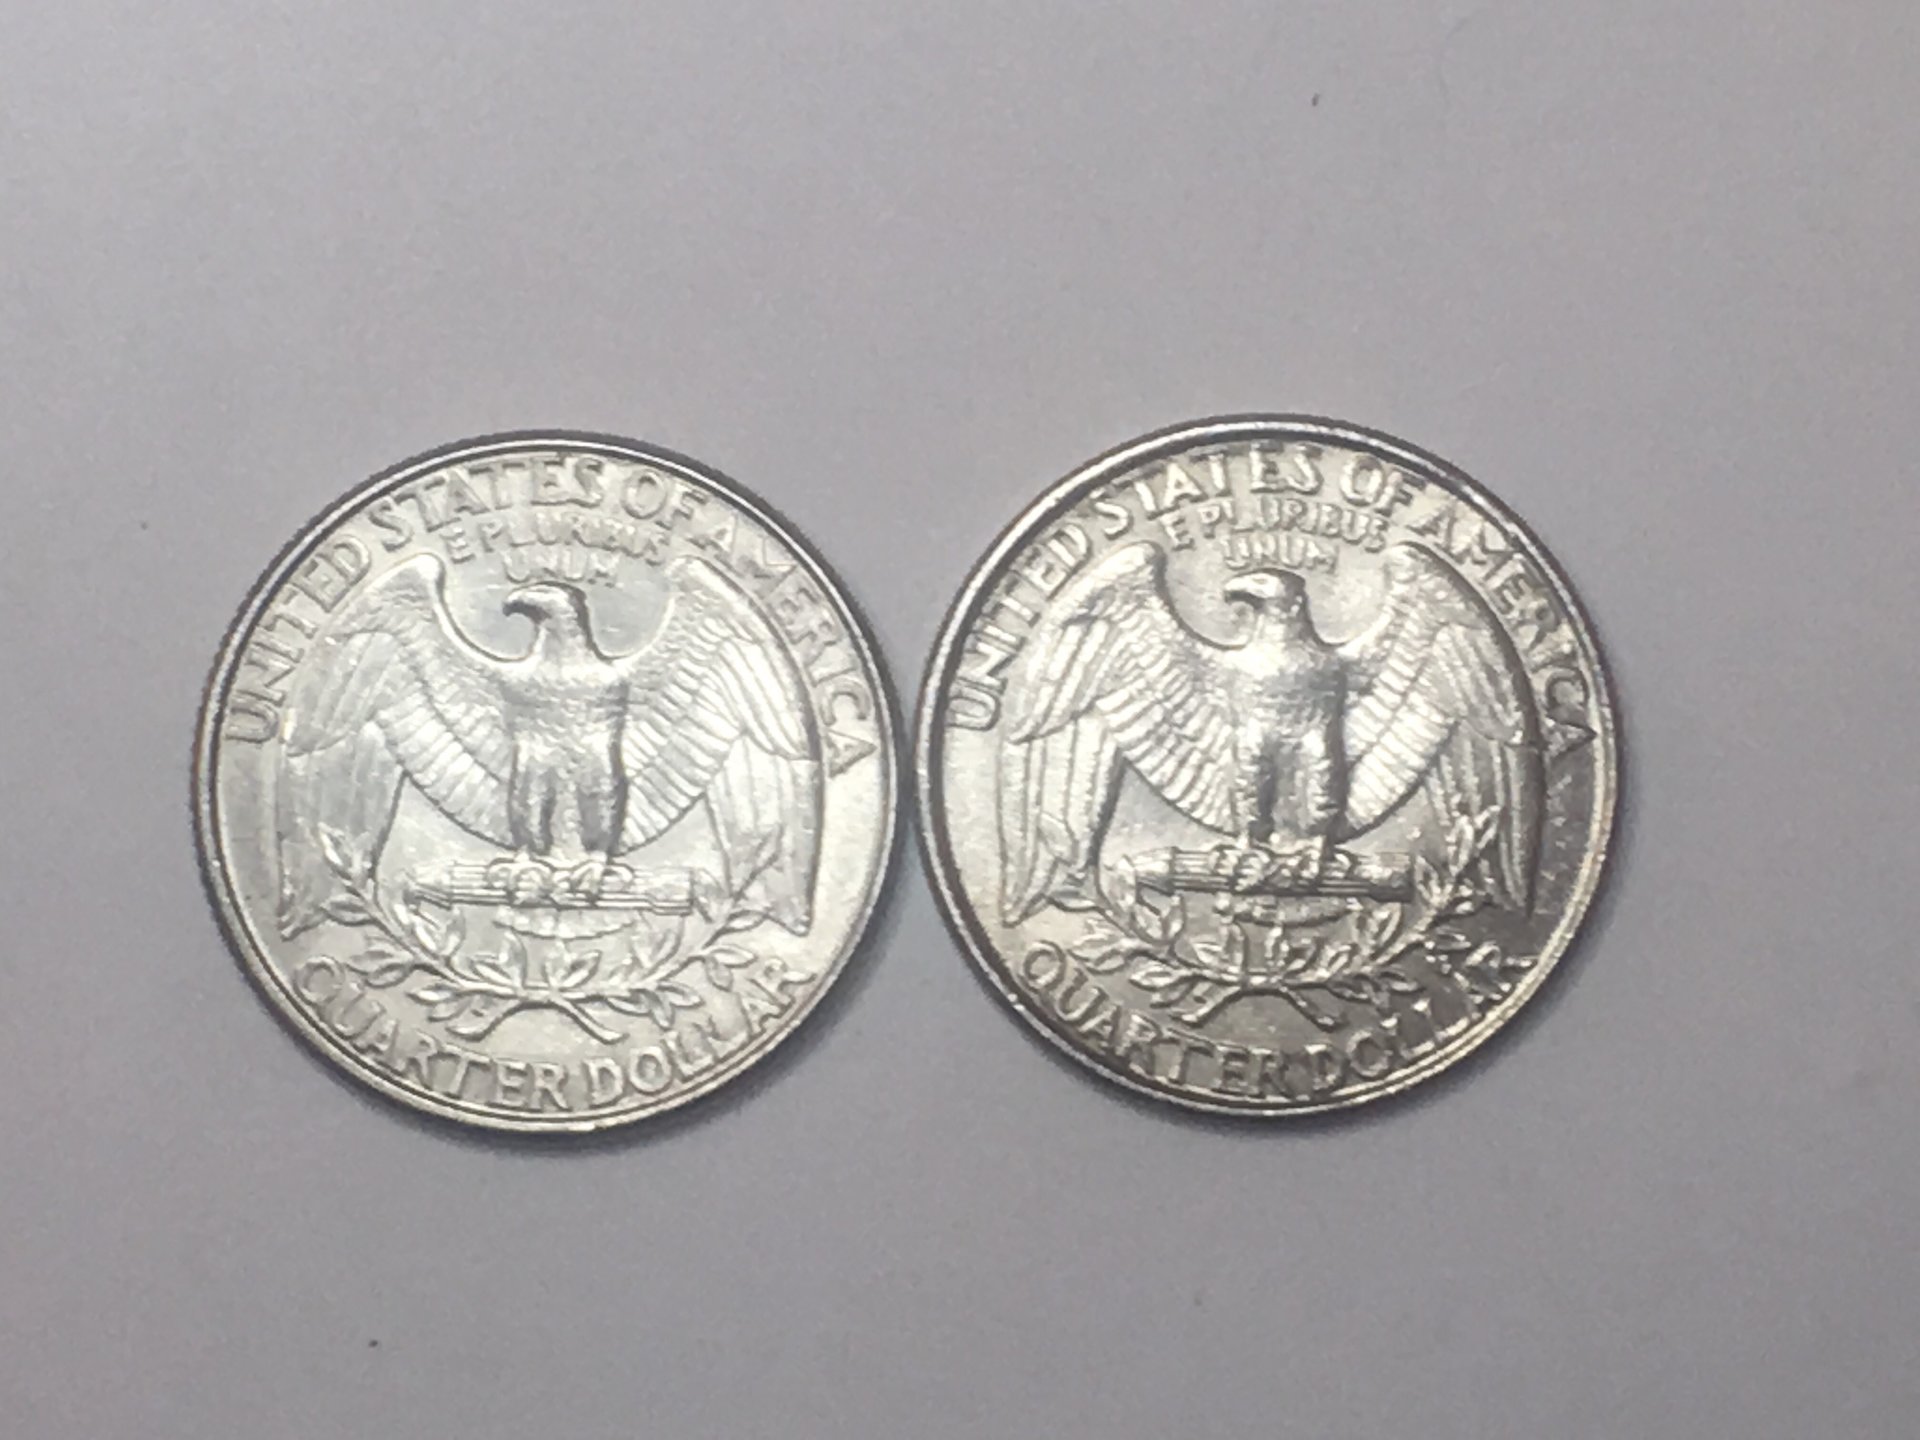 1996 P mint quarter. | Coin Talk